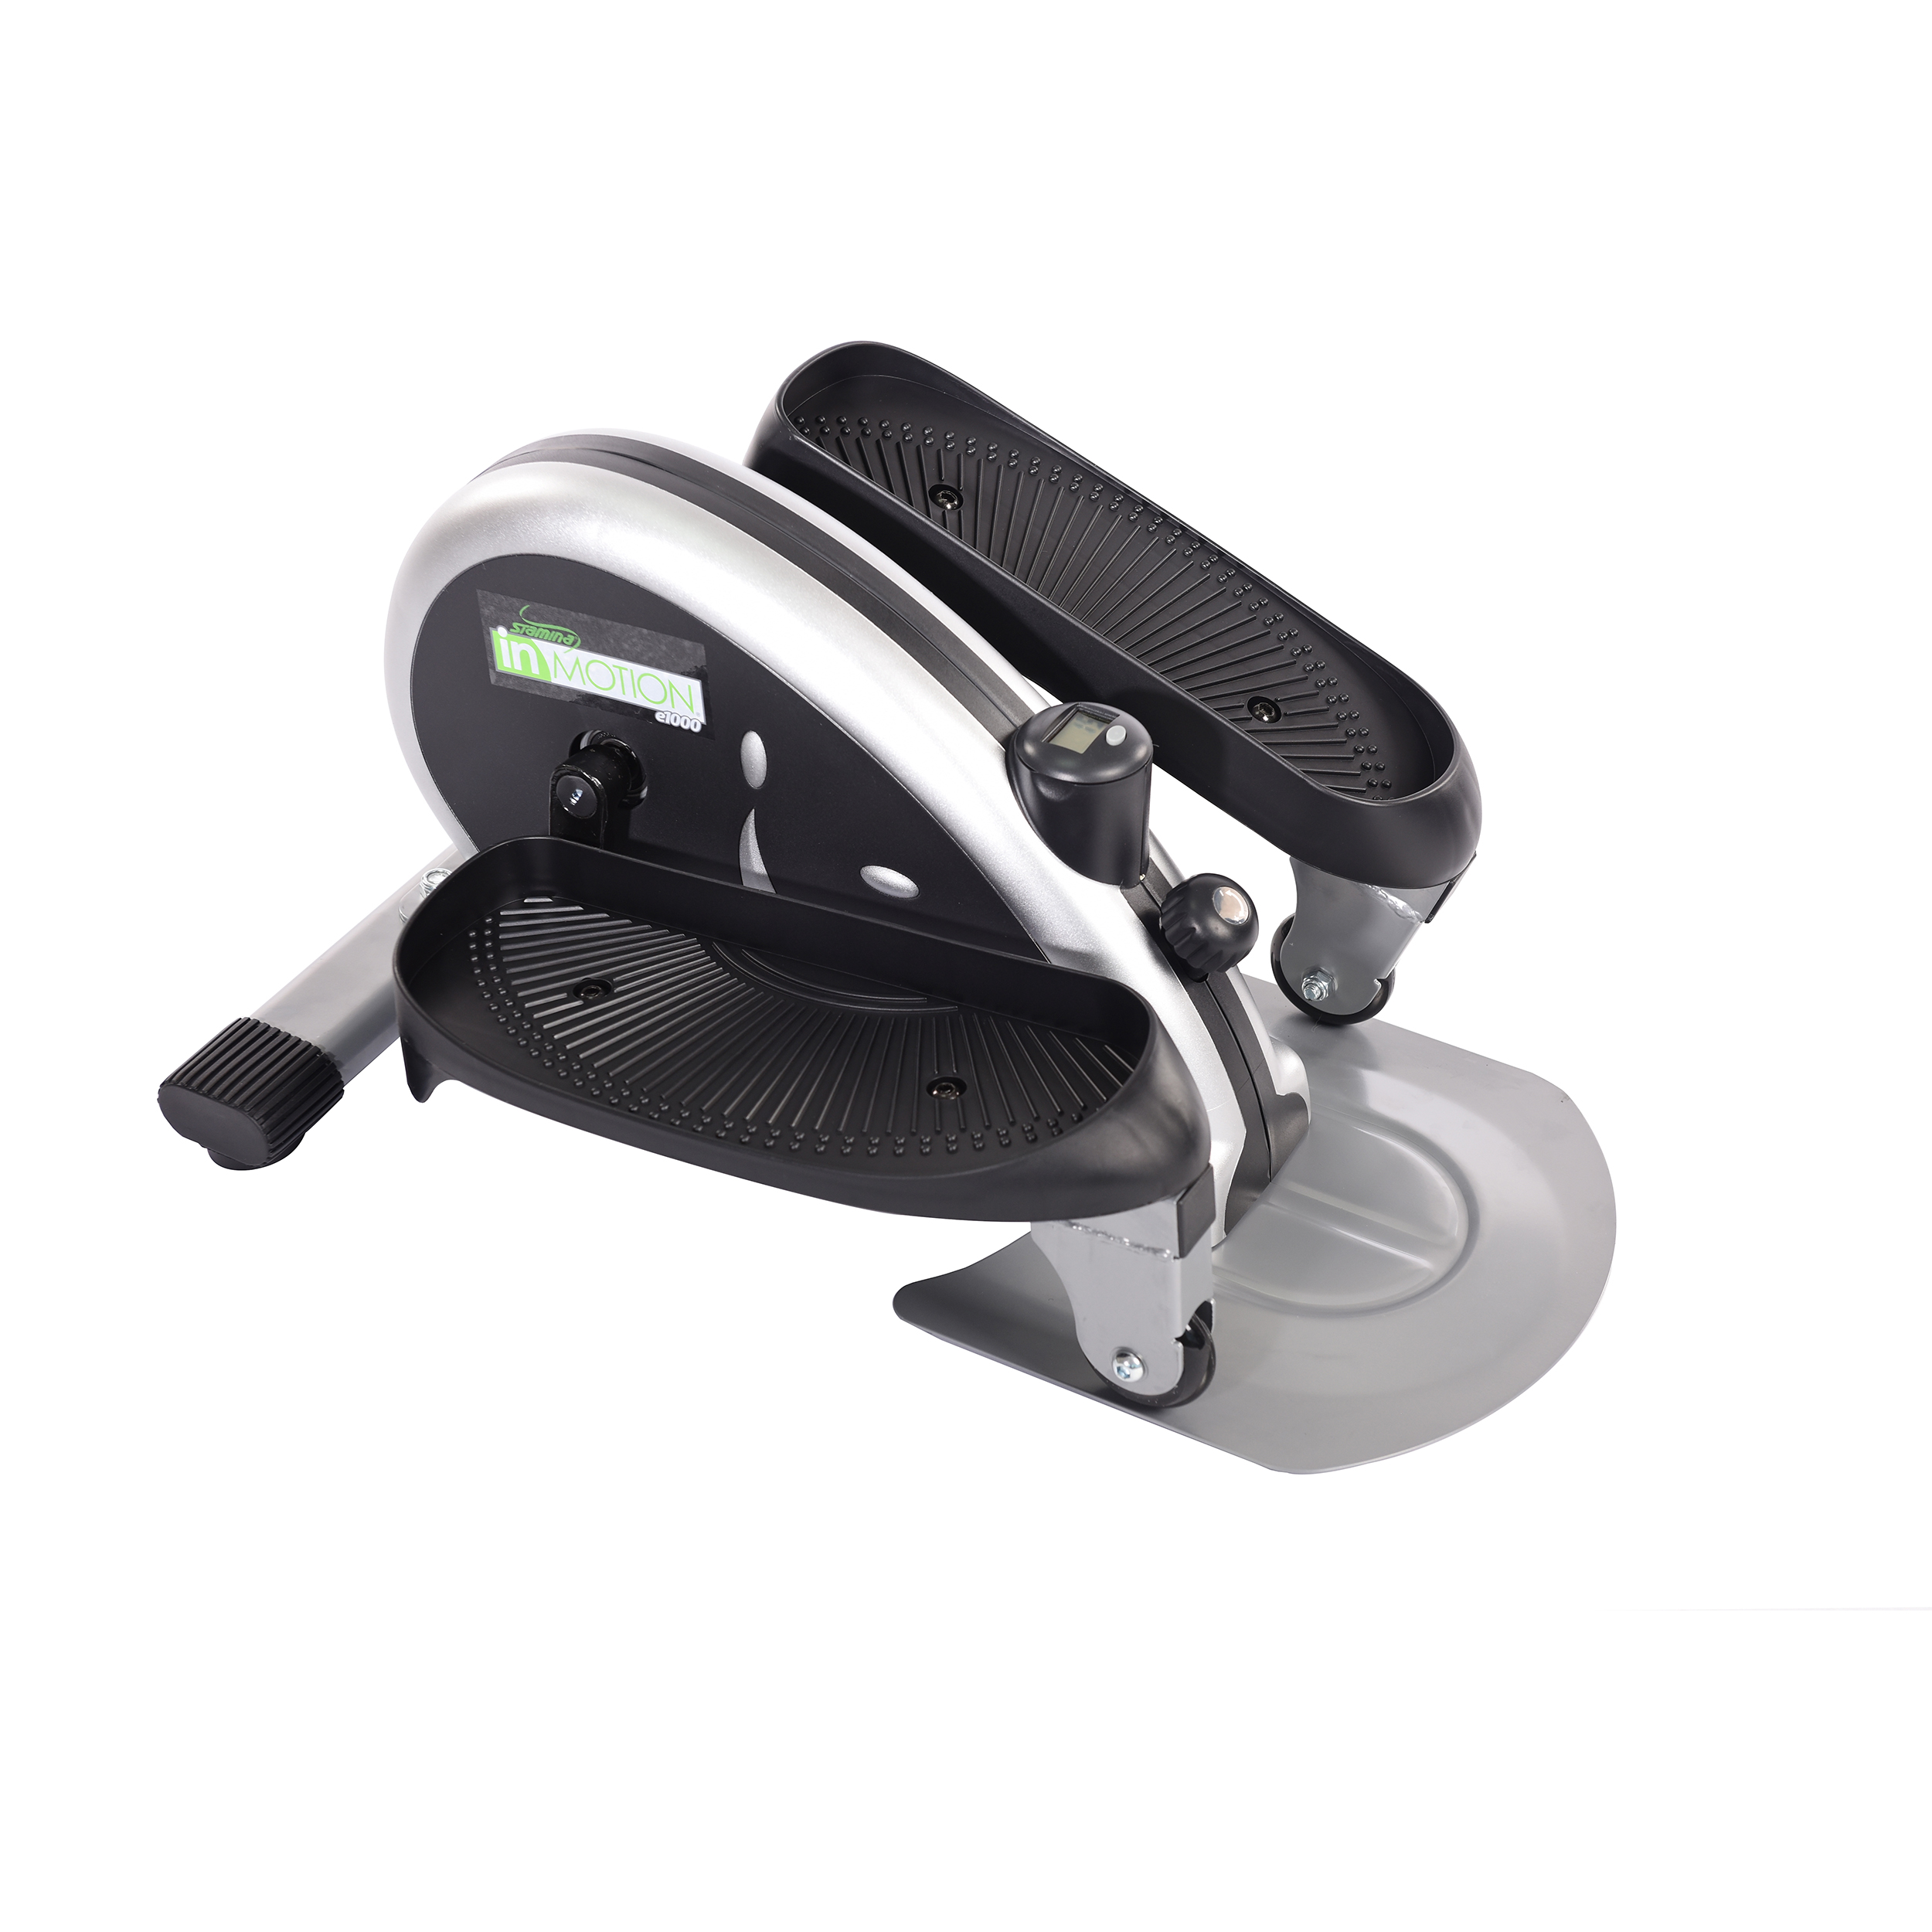 Stamina InMotion E1000 Compact Strider portable home exercise equipment